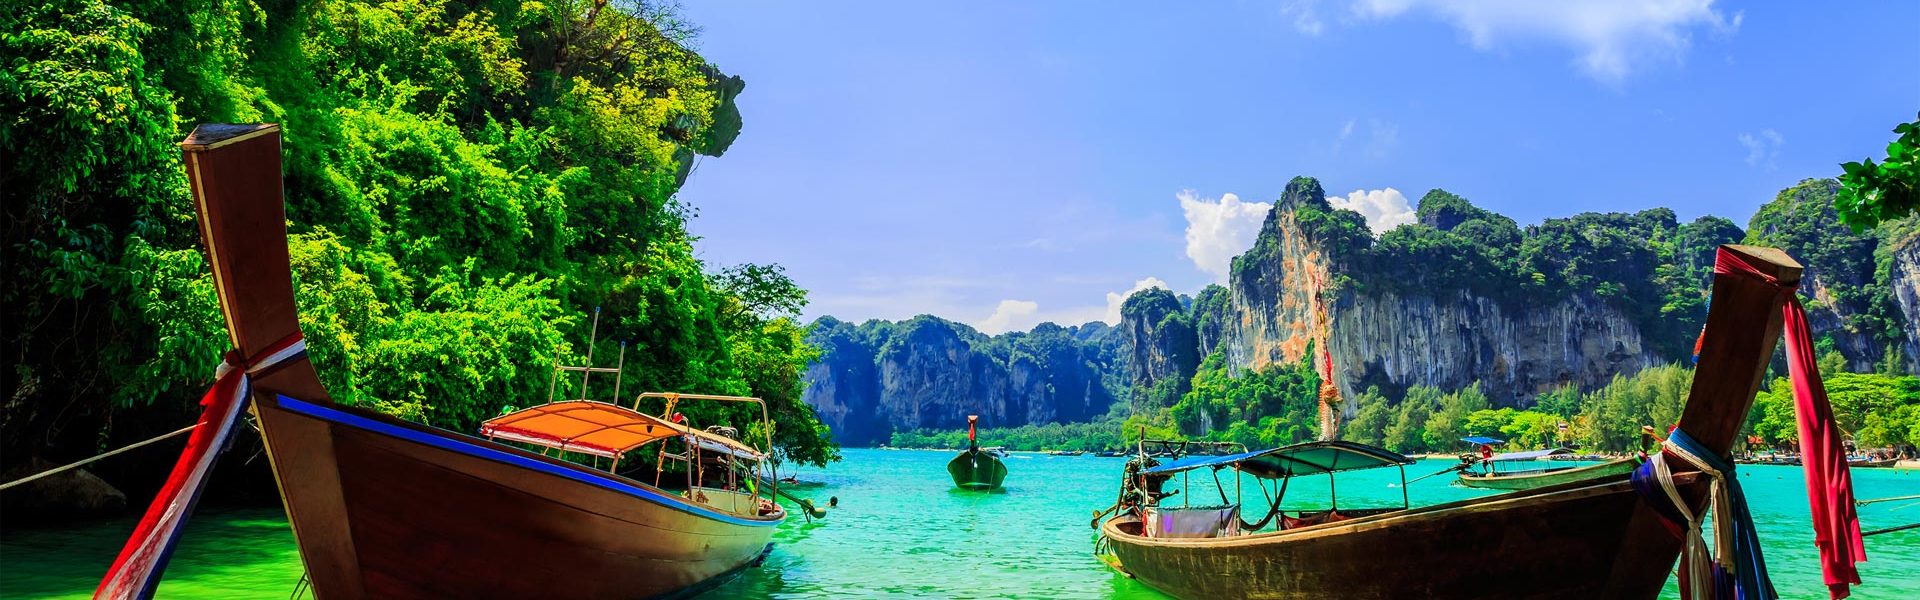 Thailand Holidays & Tours - Tailored Journeys